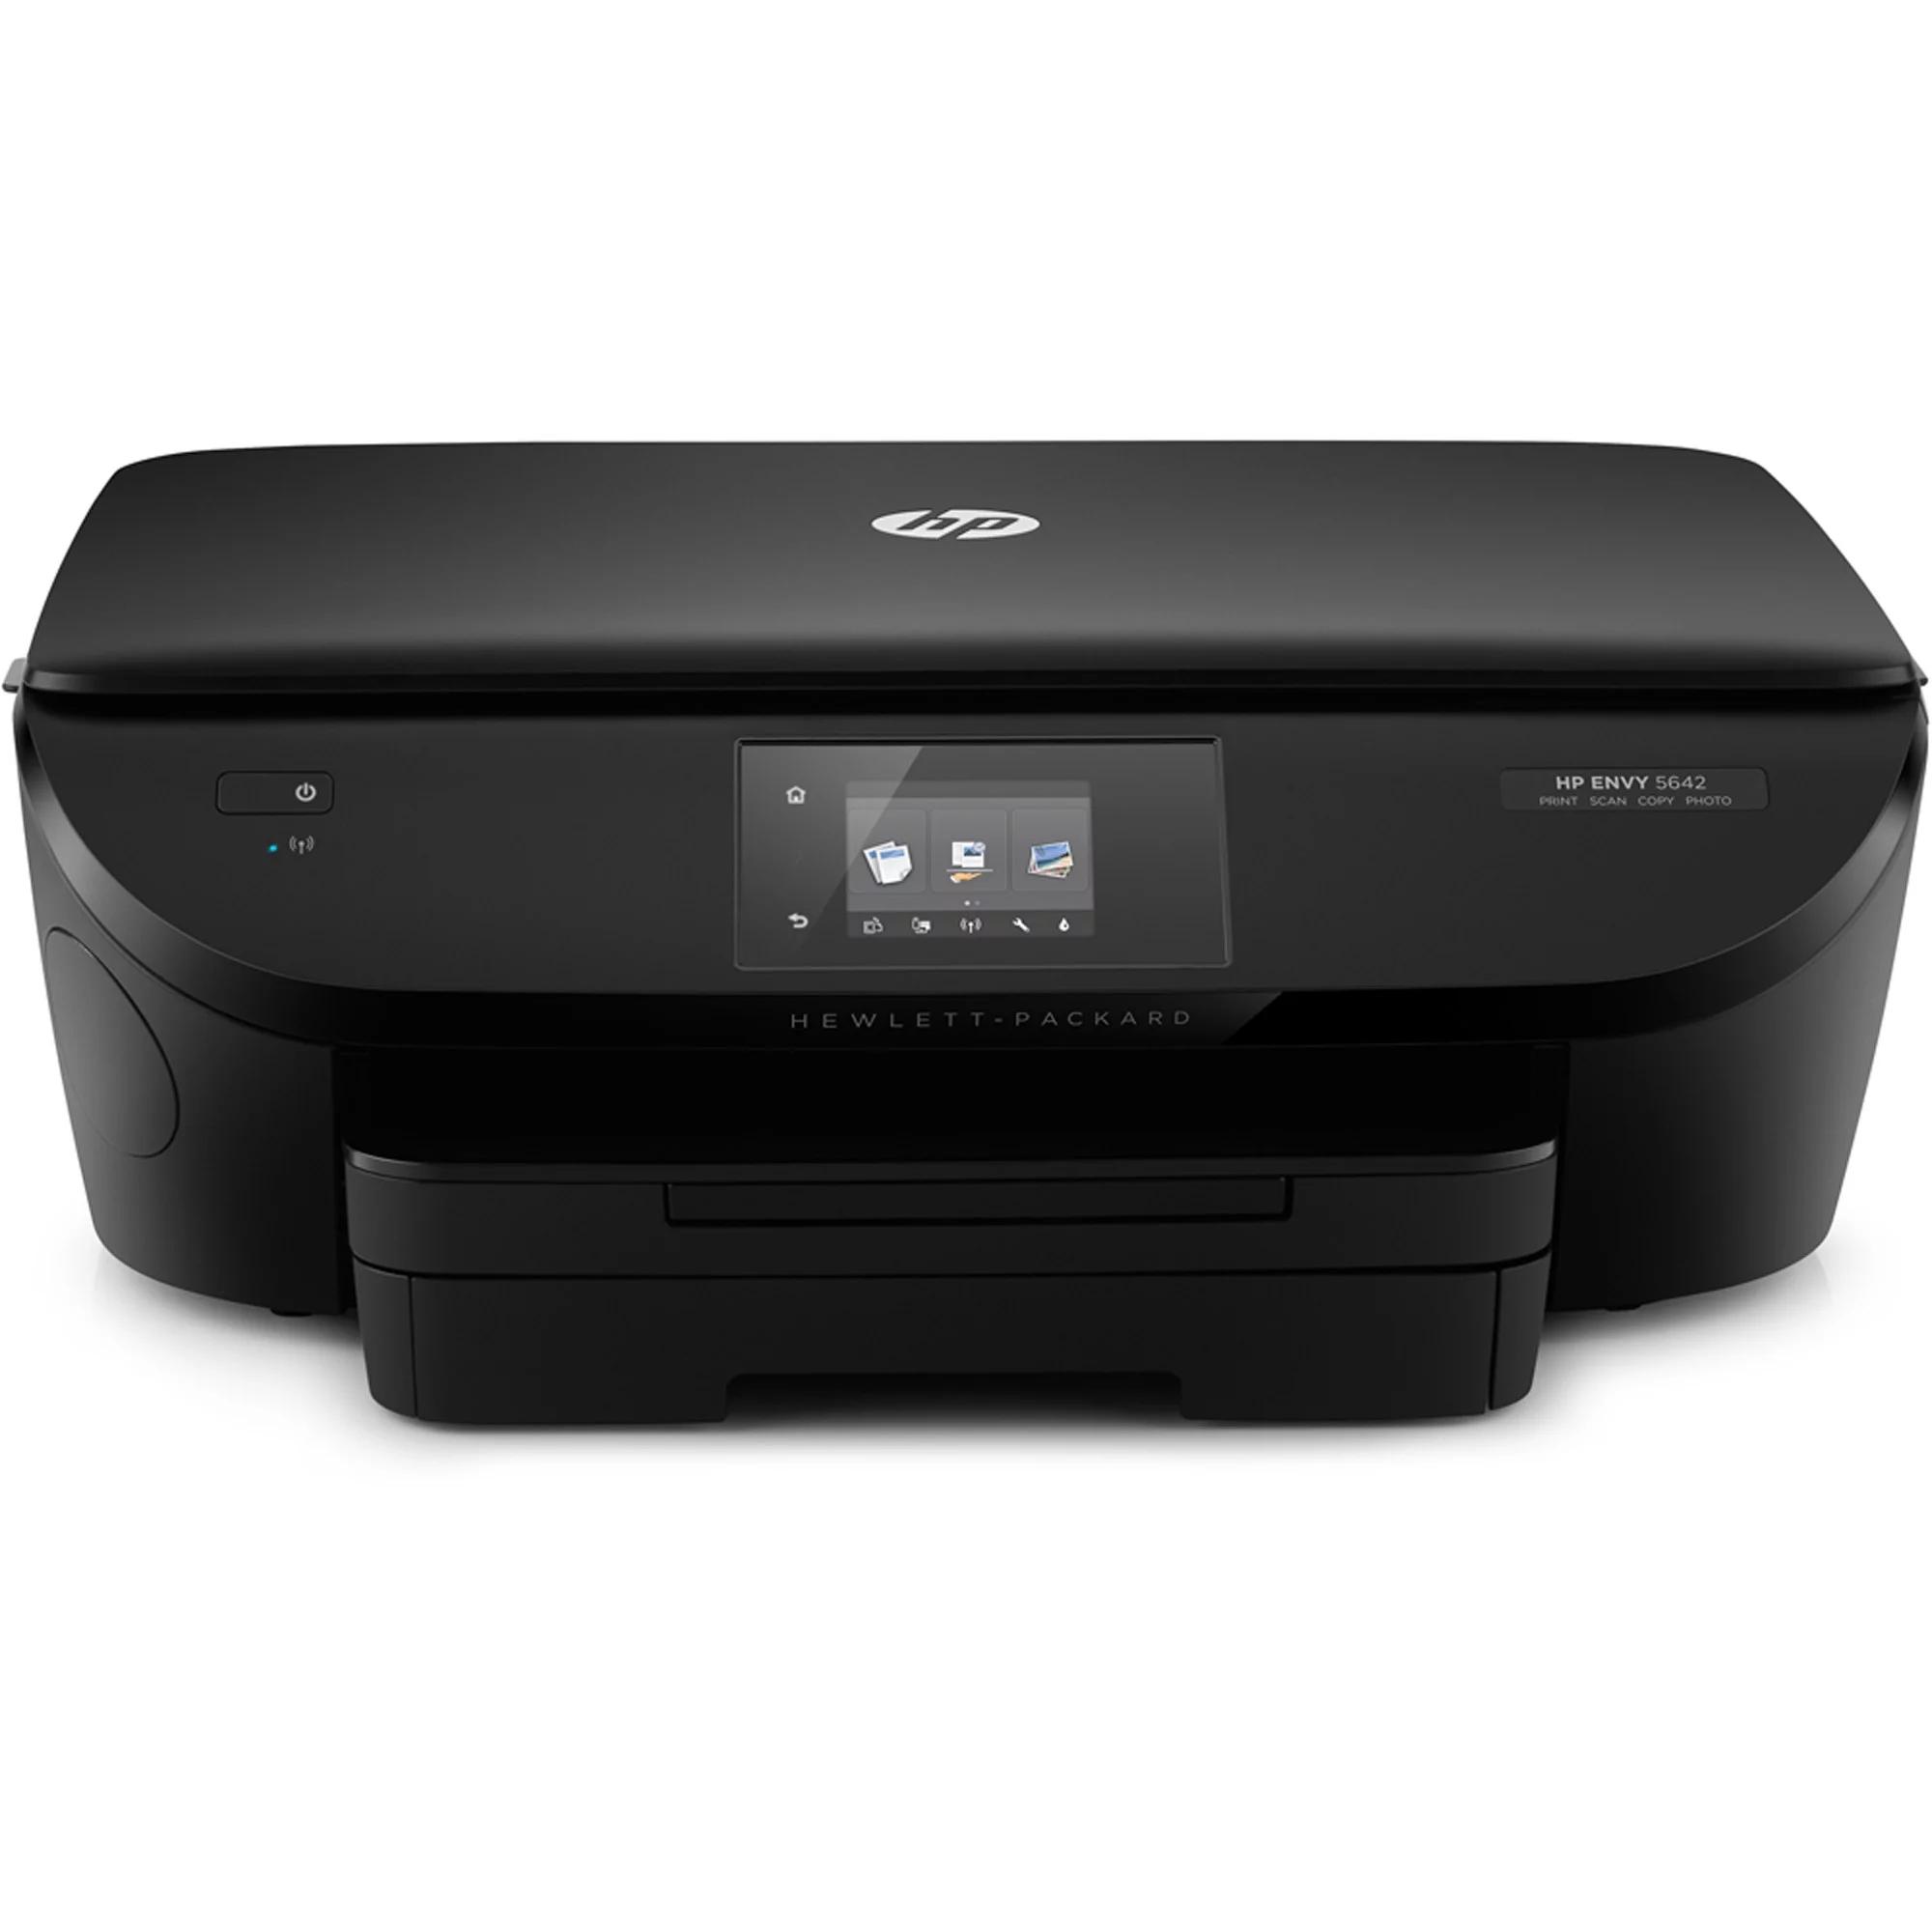 Hp envy 5642: powerful wireless printer - setup & troubleshooting